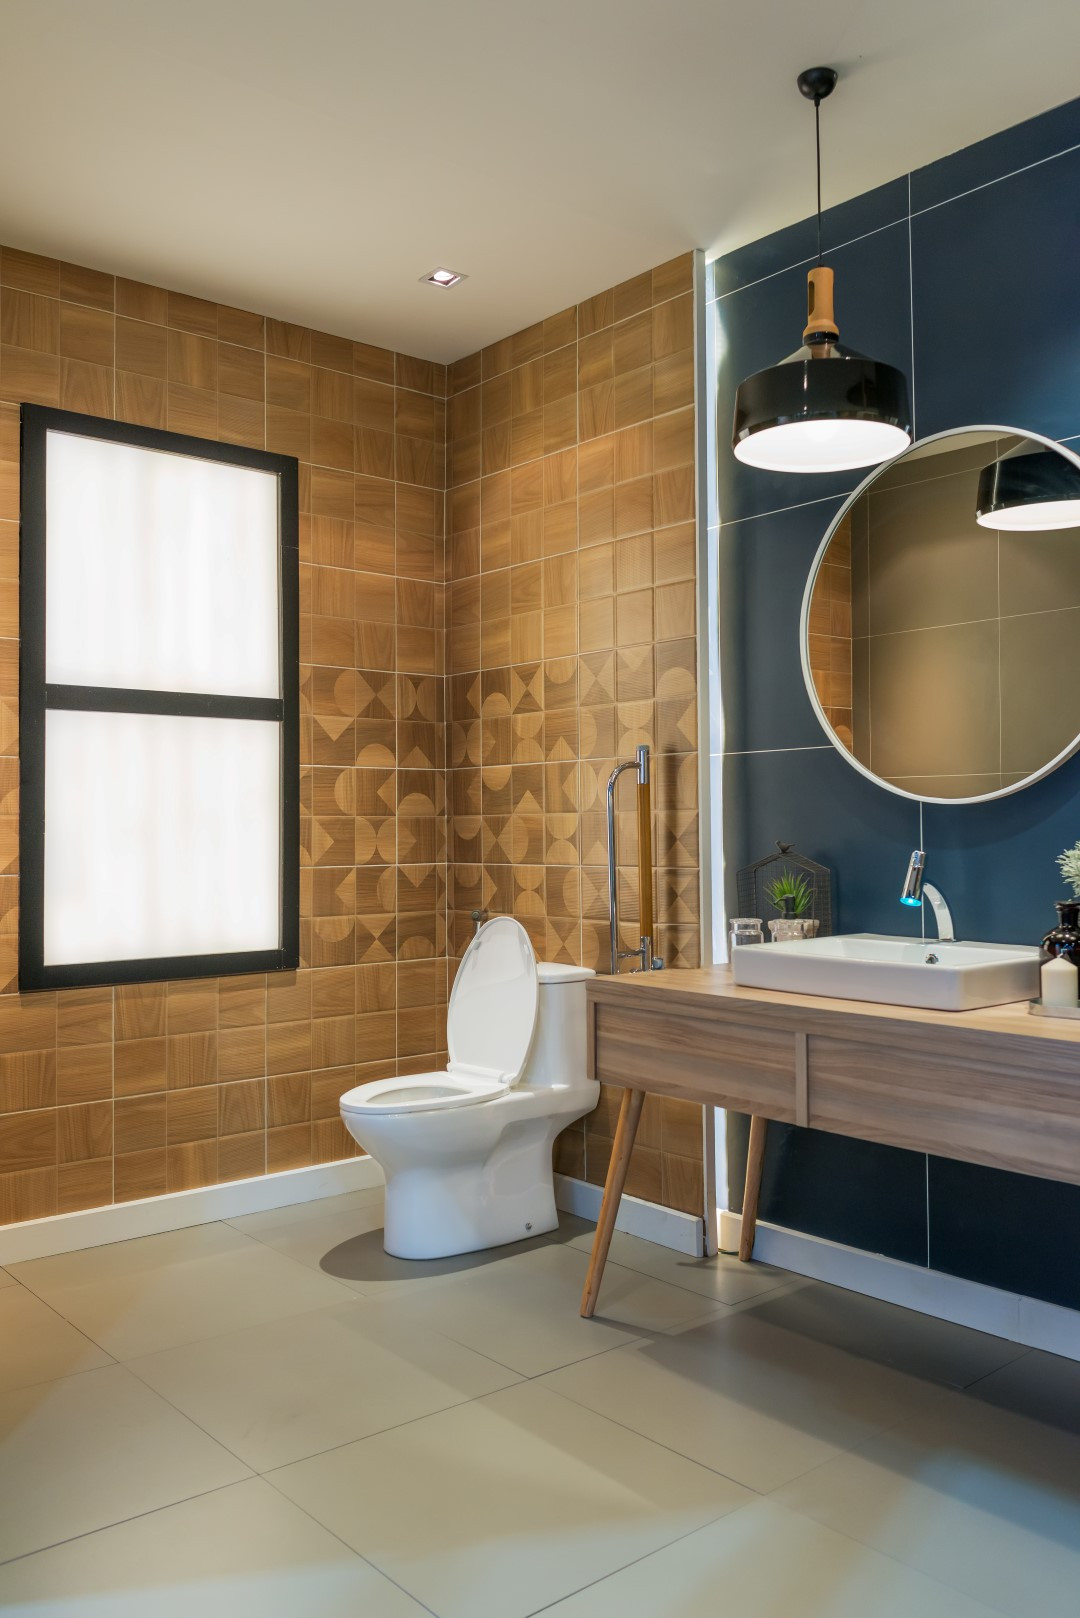 Best Tile For Bathroom Shower
 The Best Modern Bathroom Tile Trends